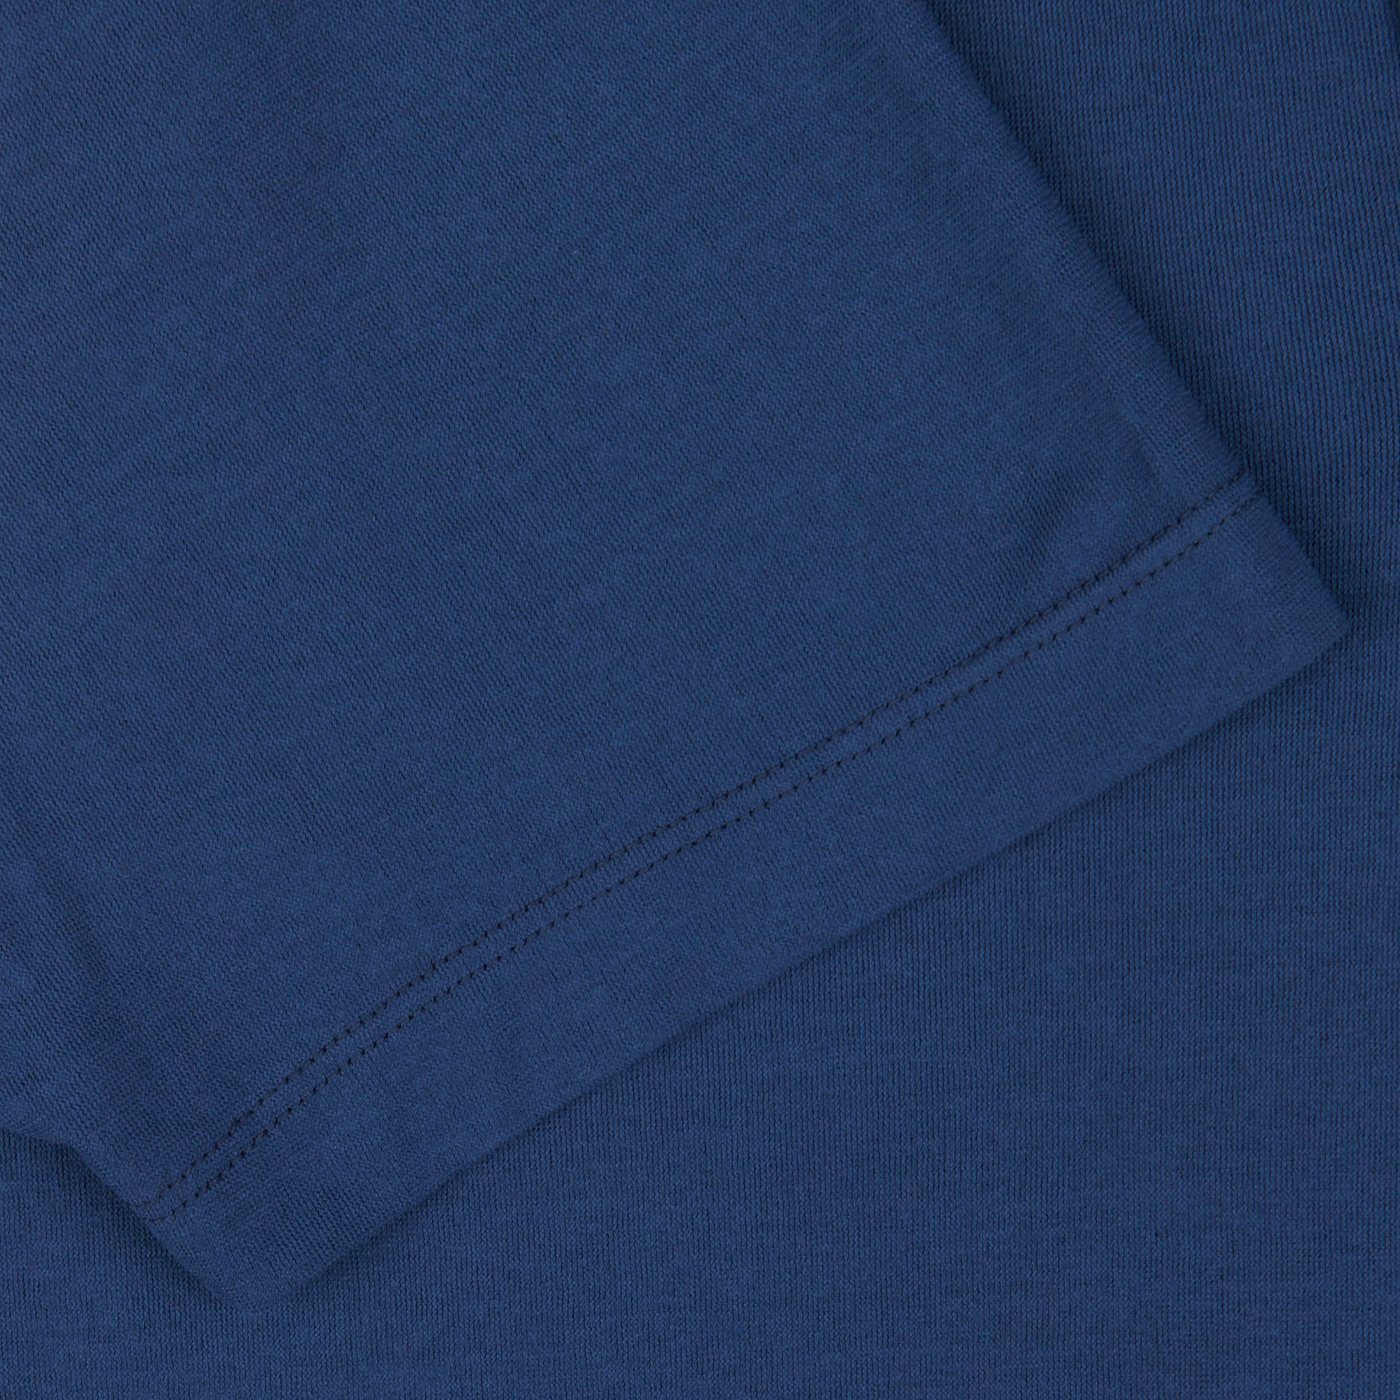 Close-up of a dark blue Altea cotton jersey capri collar polo shirt fabric texture with visible seam stitches.